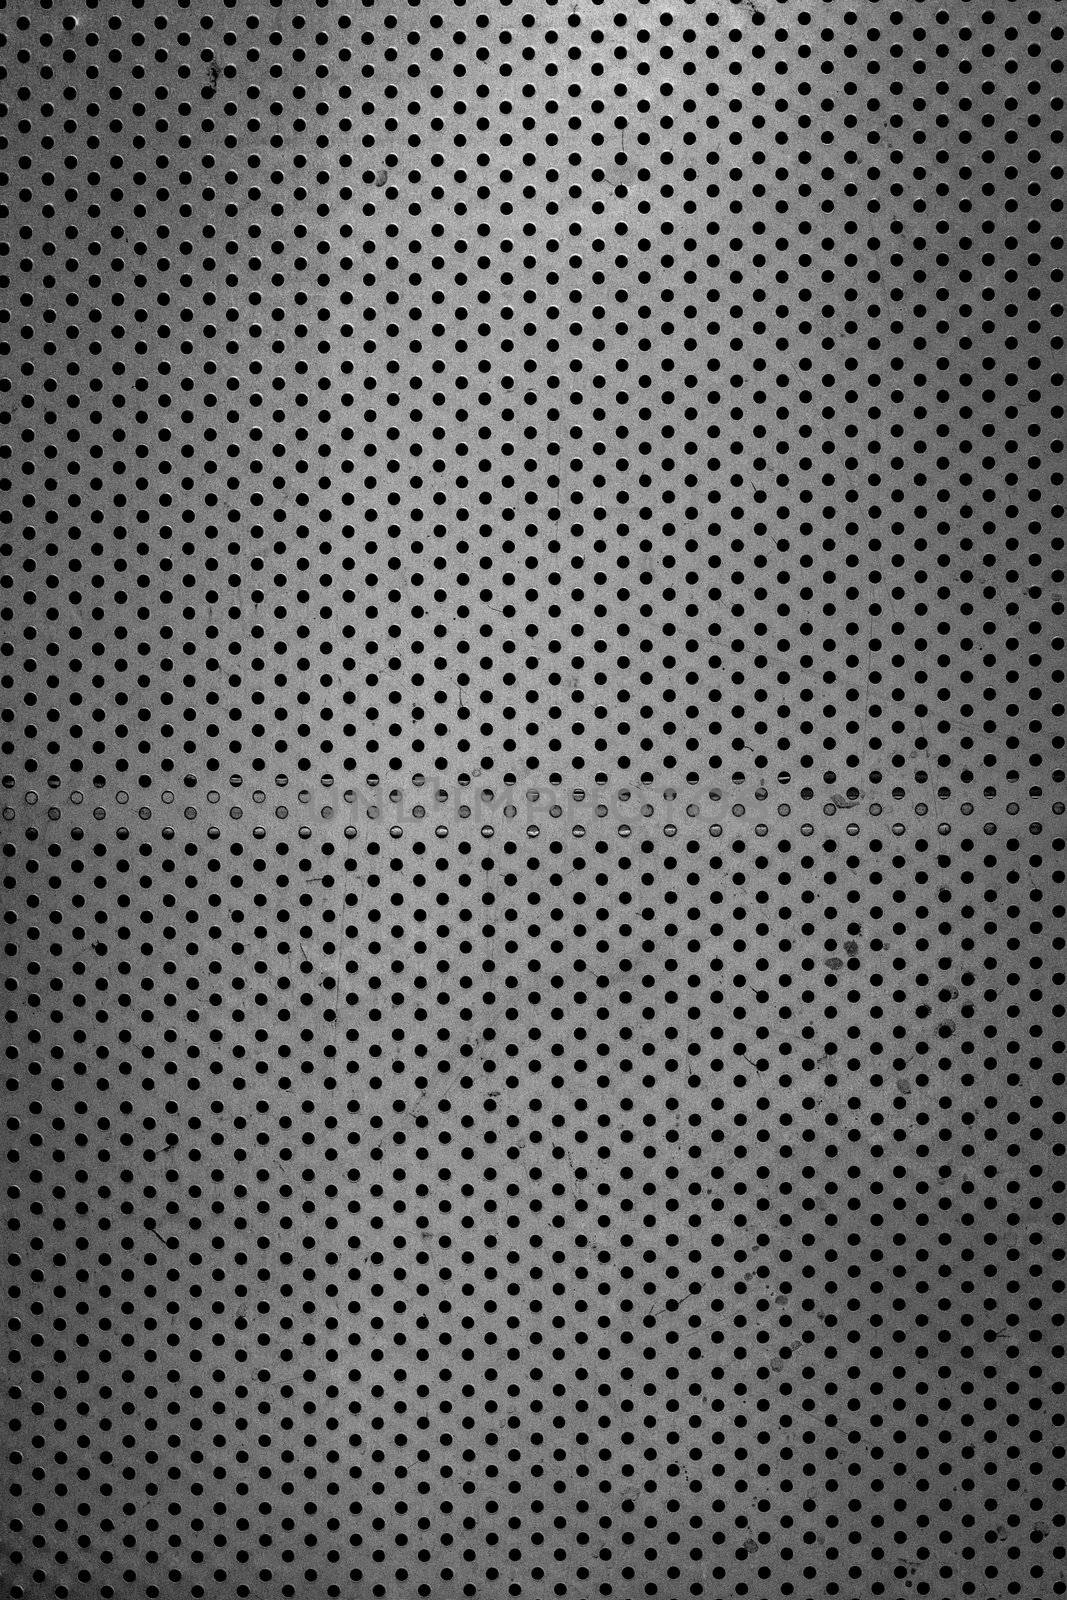 Seamless halftone dot pattern background